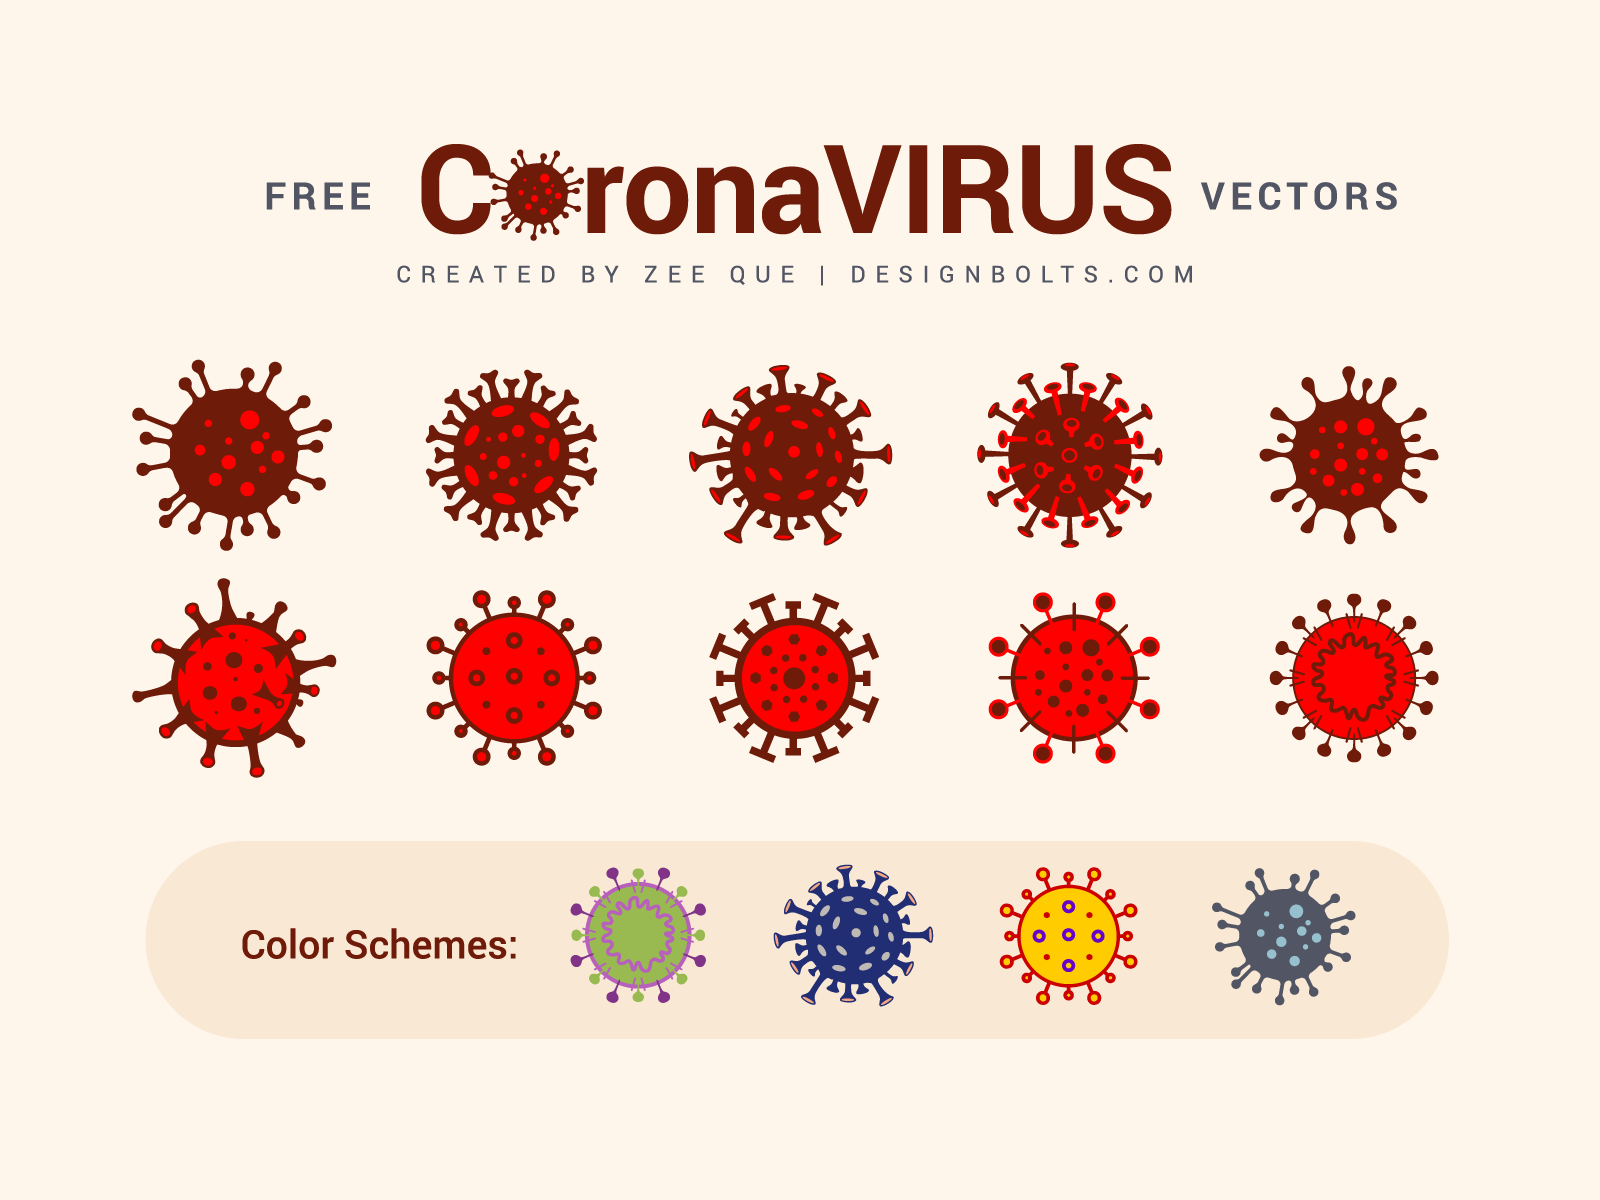 Free Coronavirus Vector Ai, EPS + Color Schemes by Zee Que